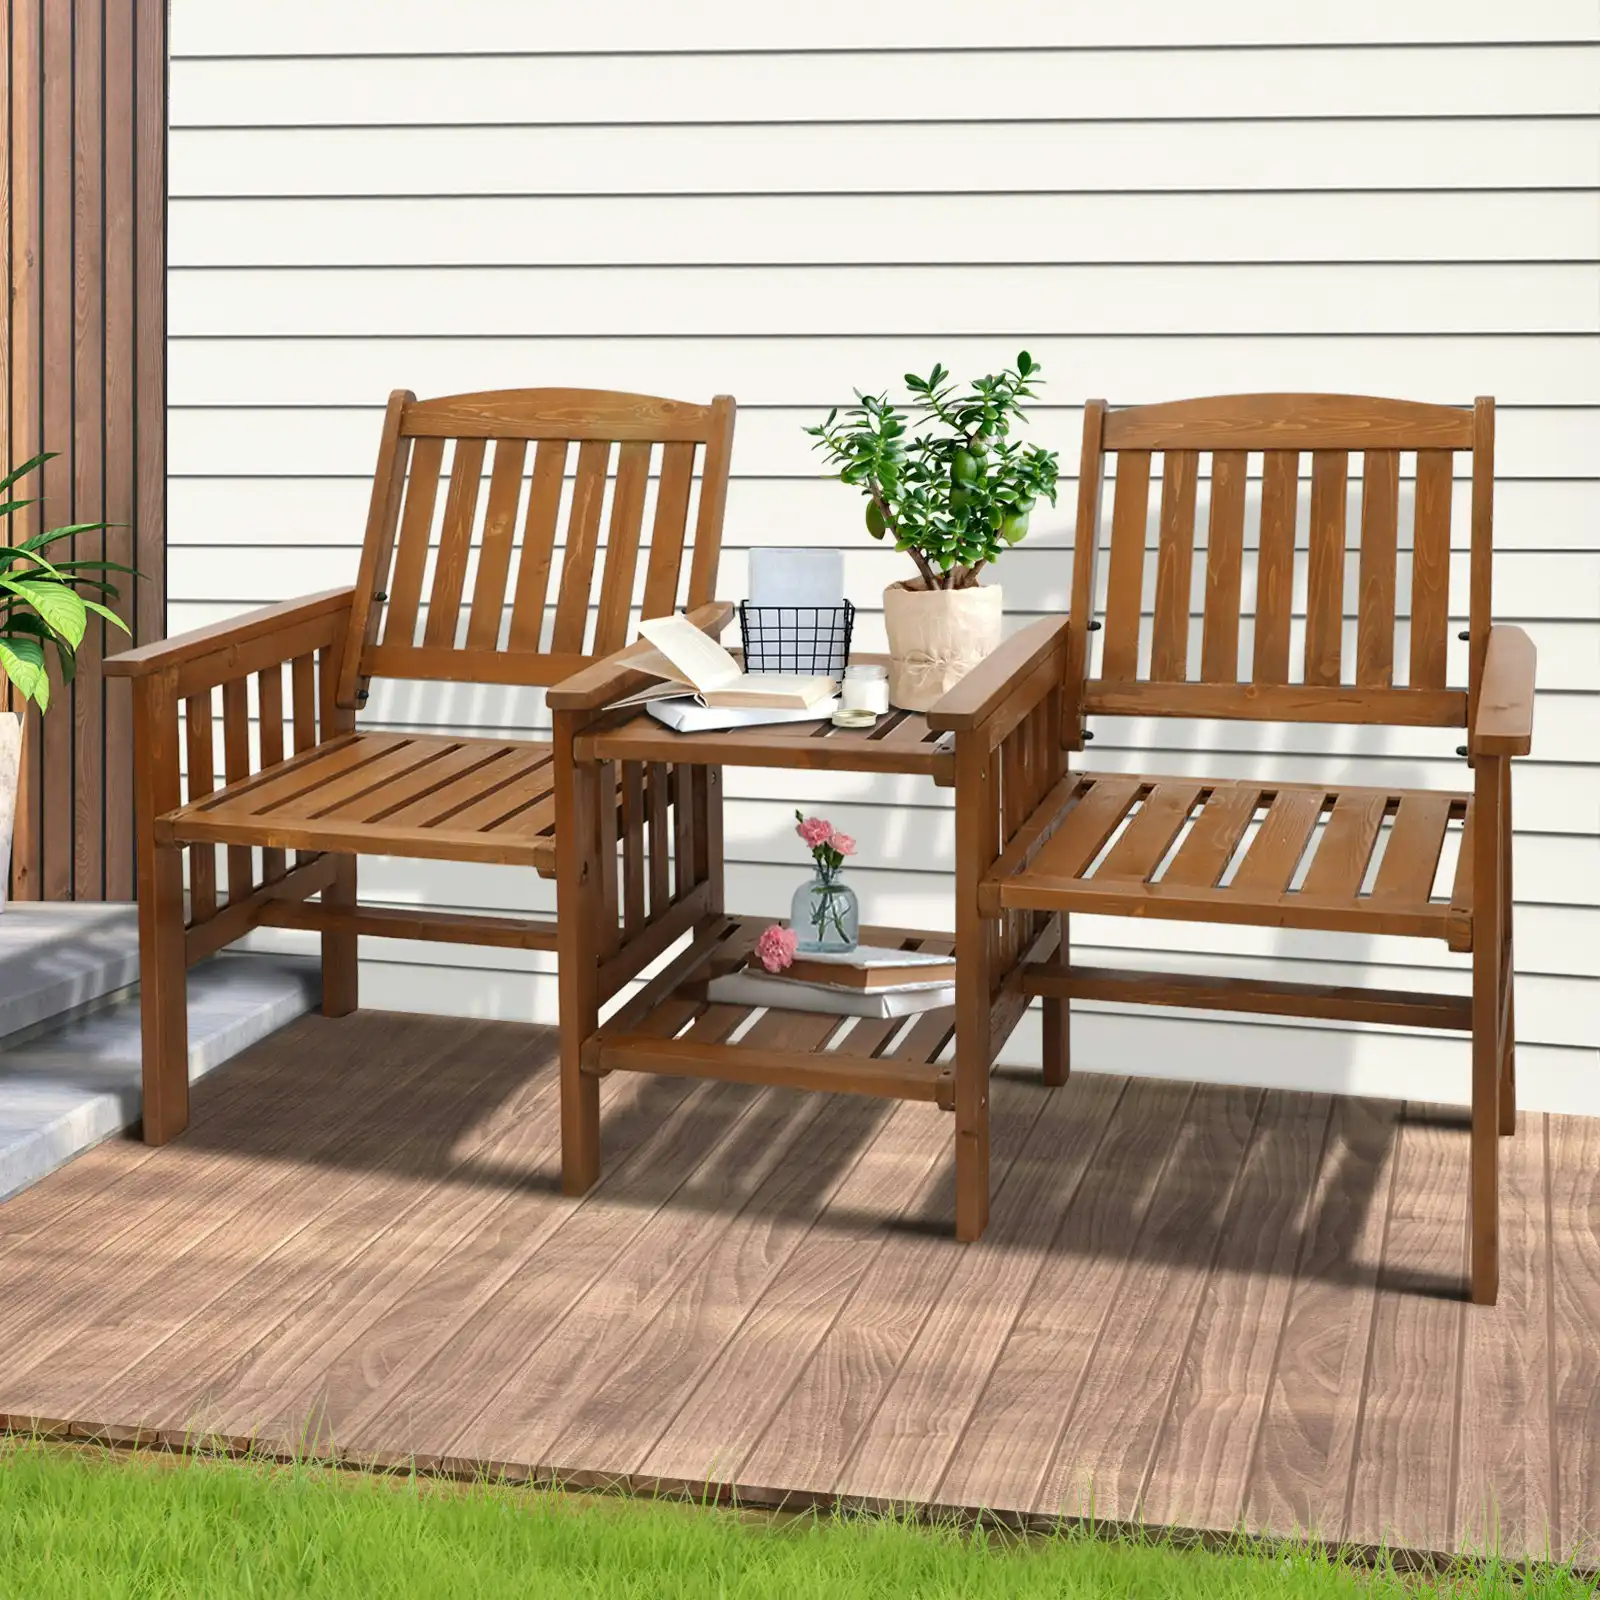 Livsip Wooden Garden Bench Chair & Table Loveseat Outdoor Furniture Patio